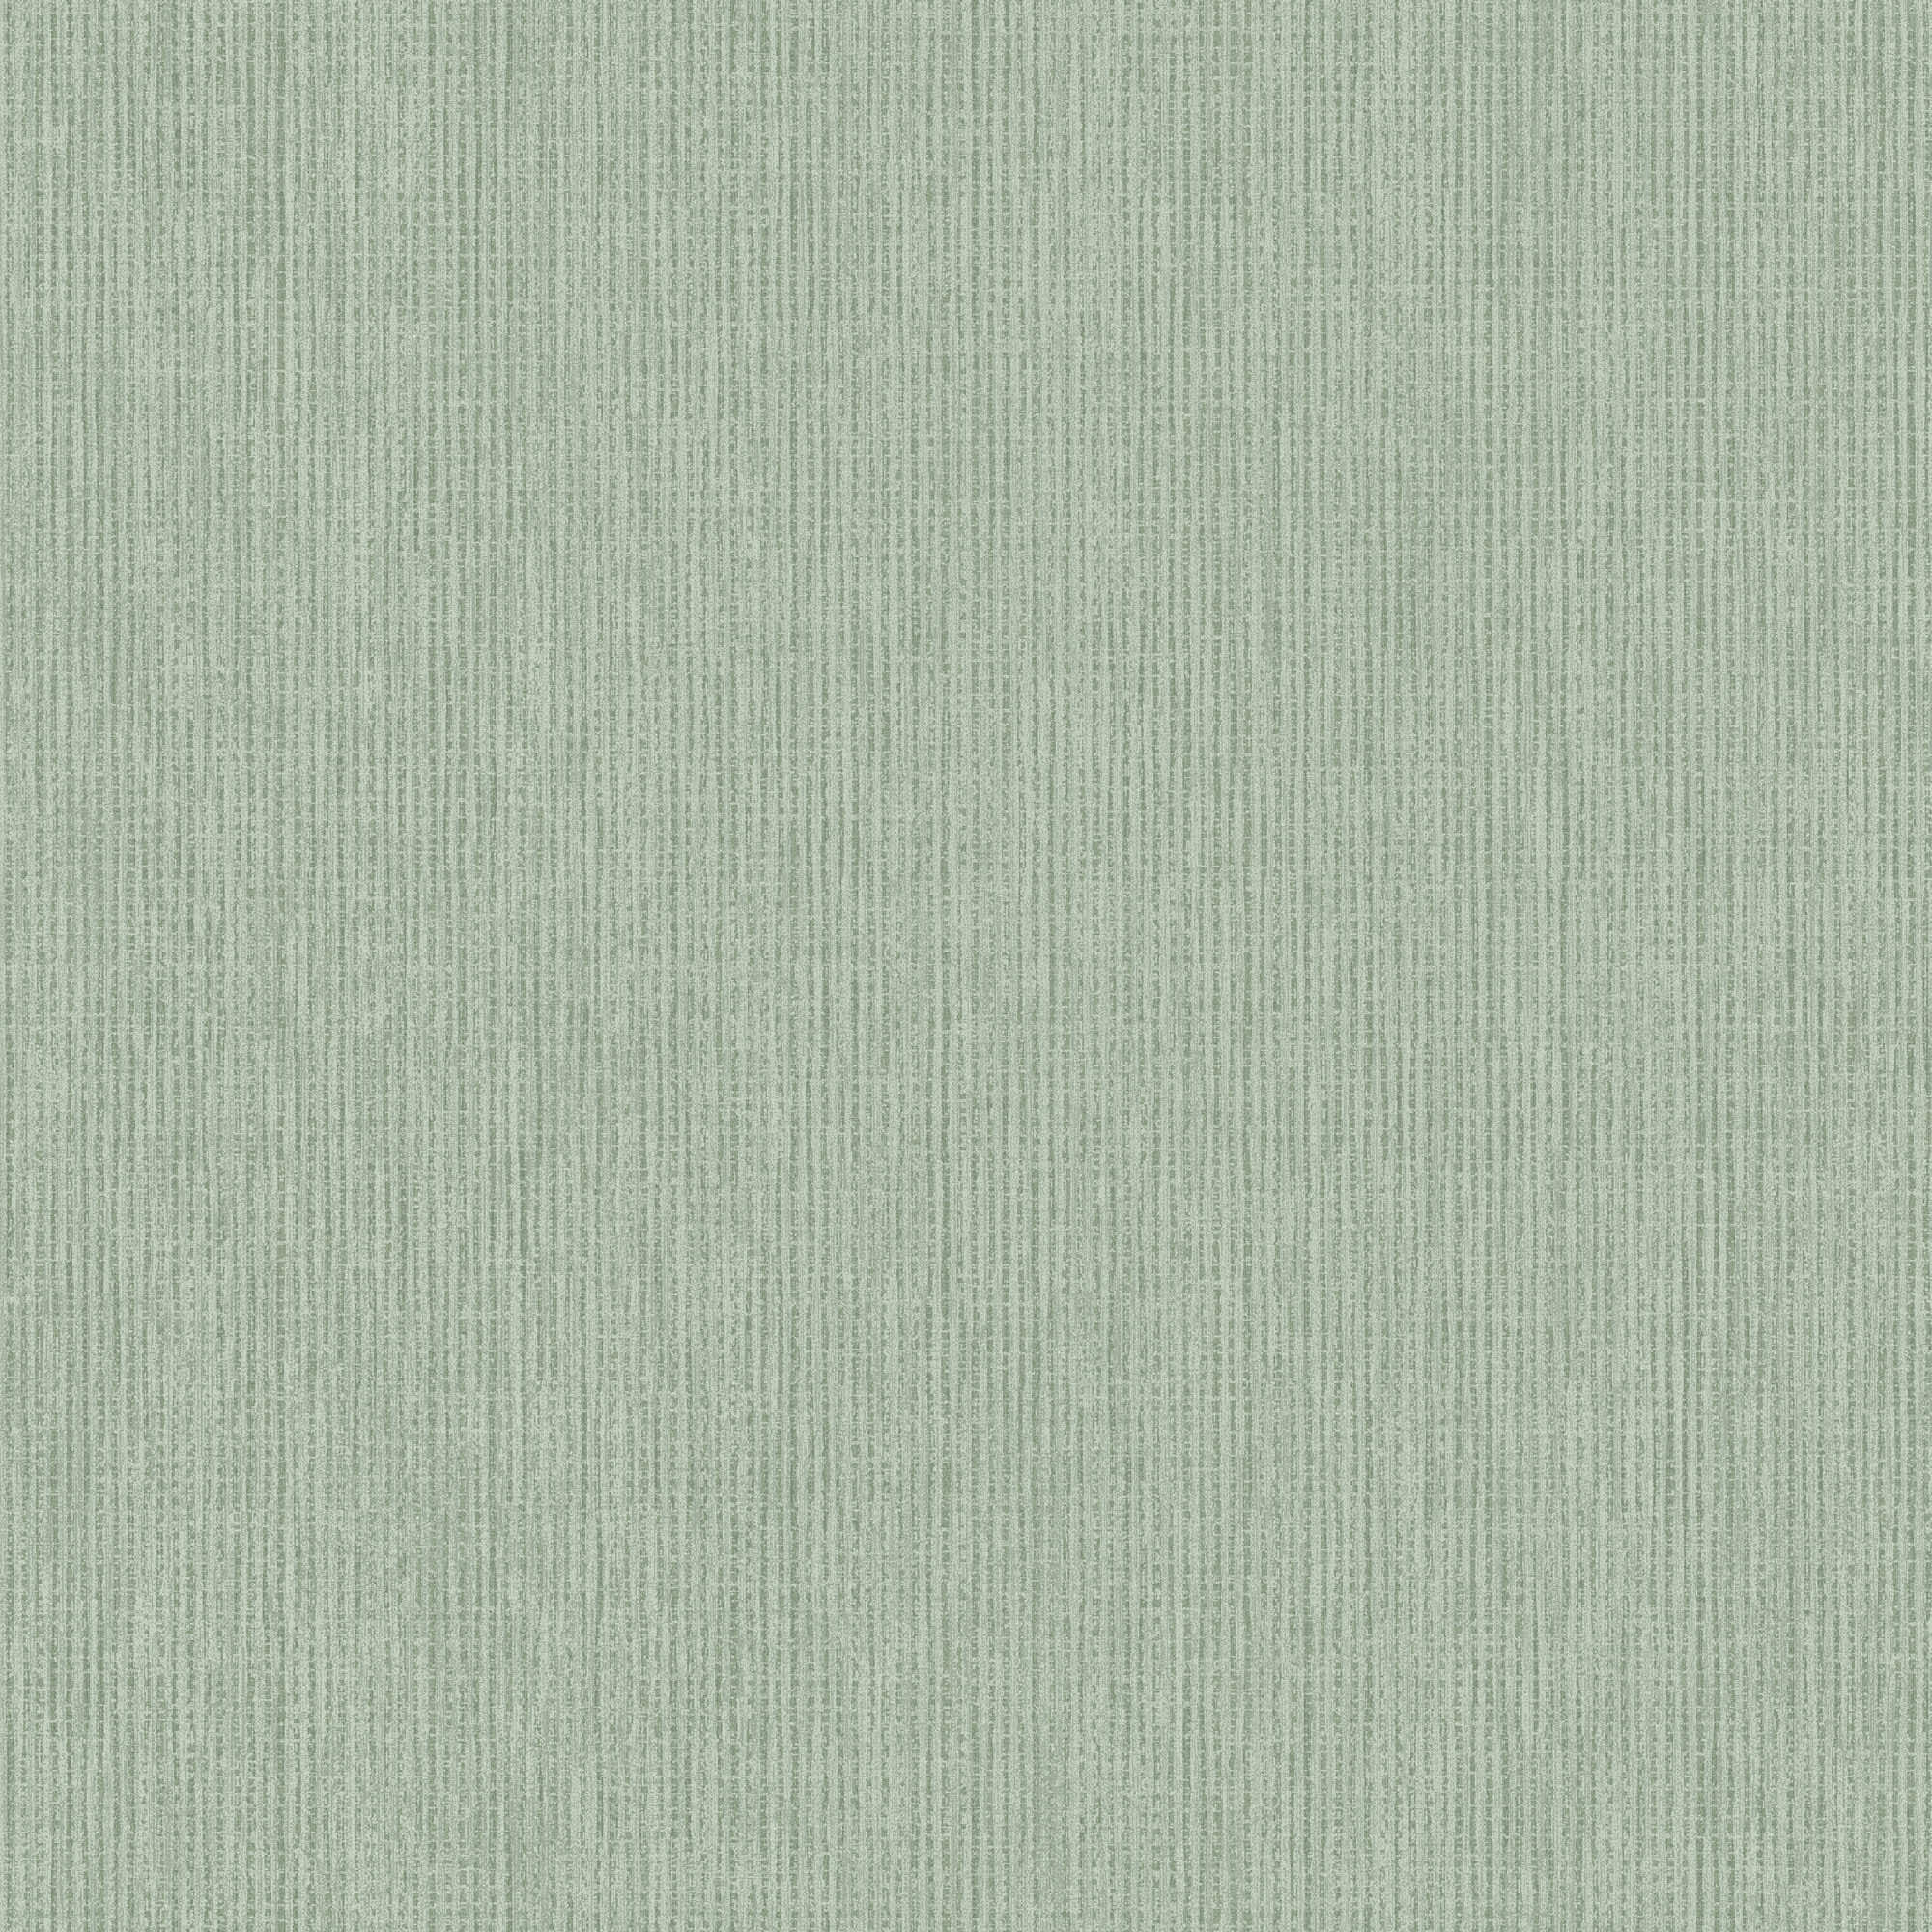 Holden Decor Linen Texture Sage Wallpaper - 10.05m x 53cm | Wickes.co.uk